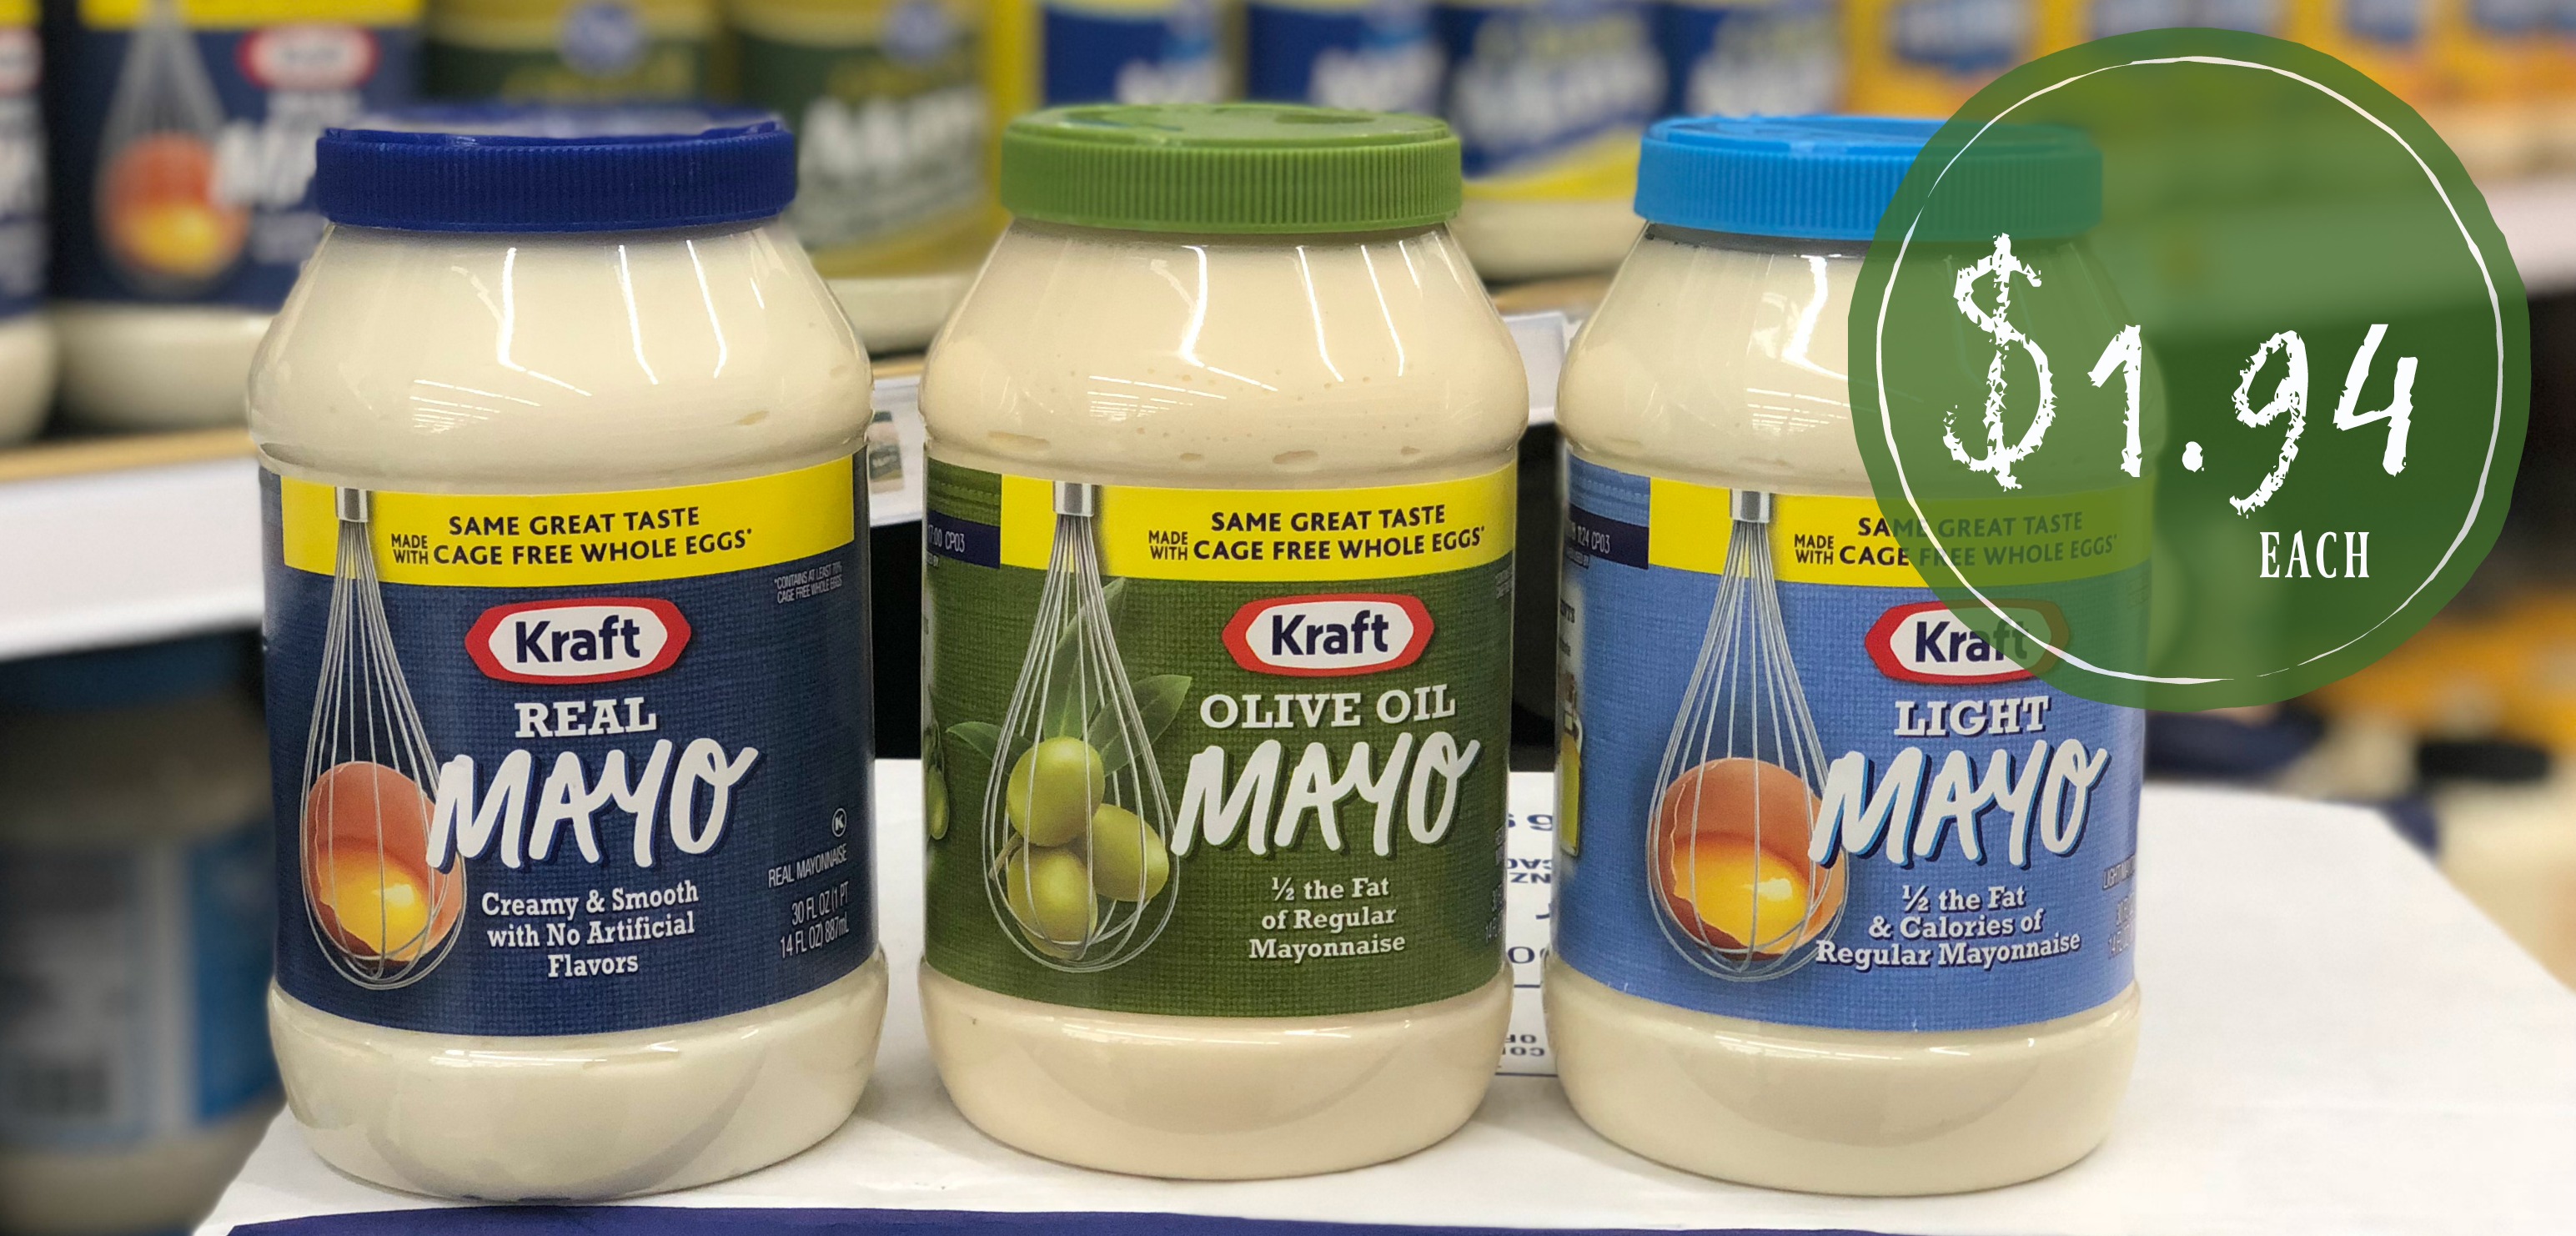 Kraft Mayo JUST $1.94 each at Kroger! (Reg Price $4.19) | Kroger Krazy